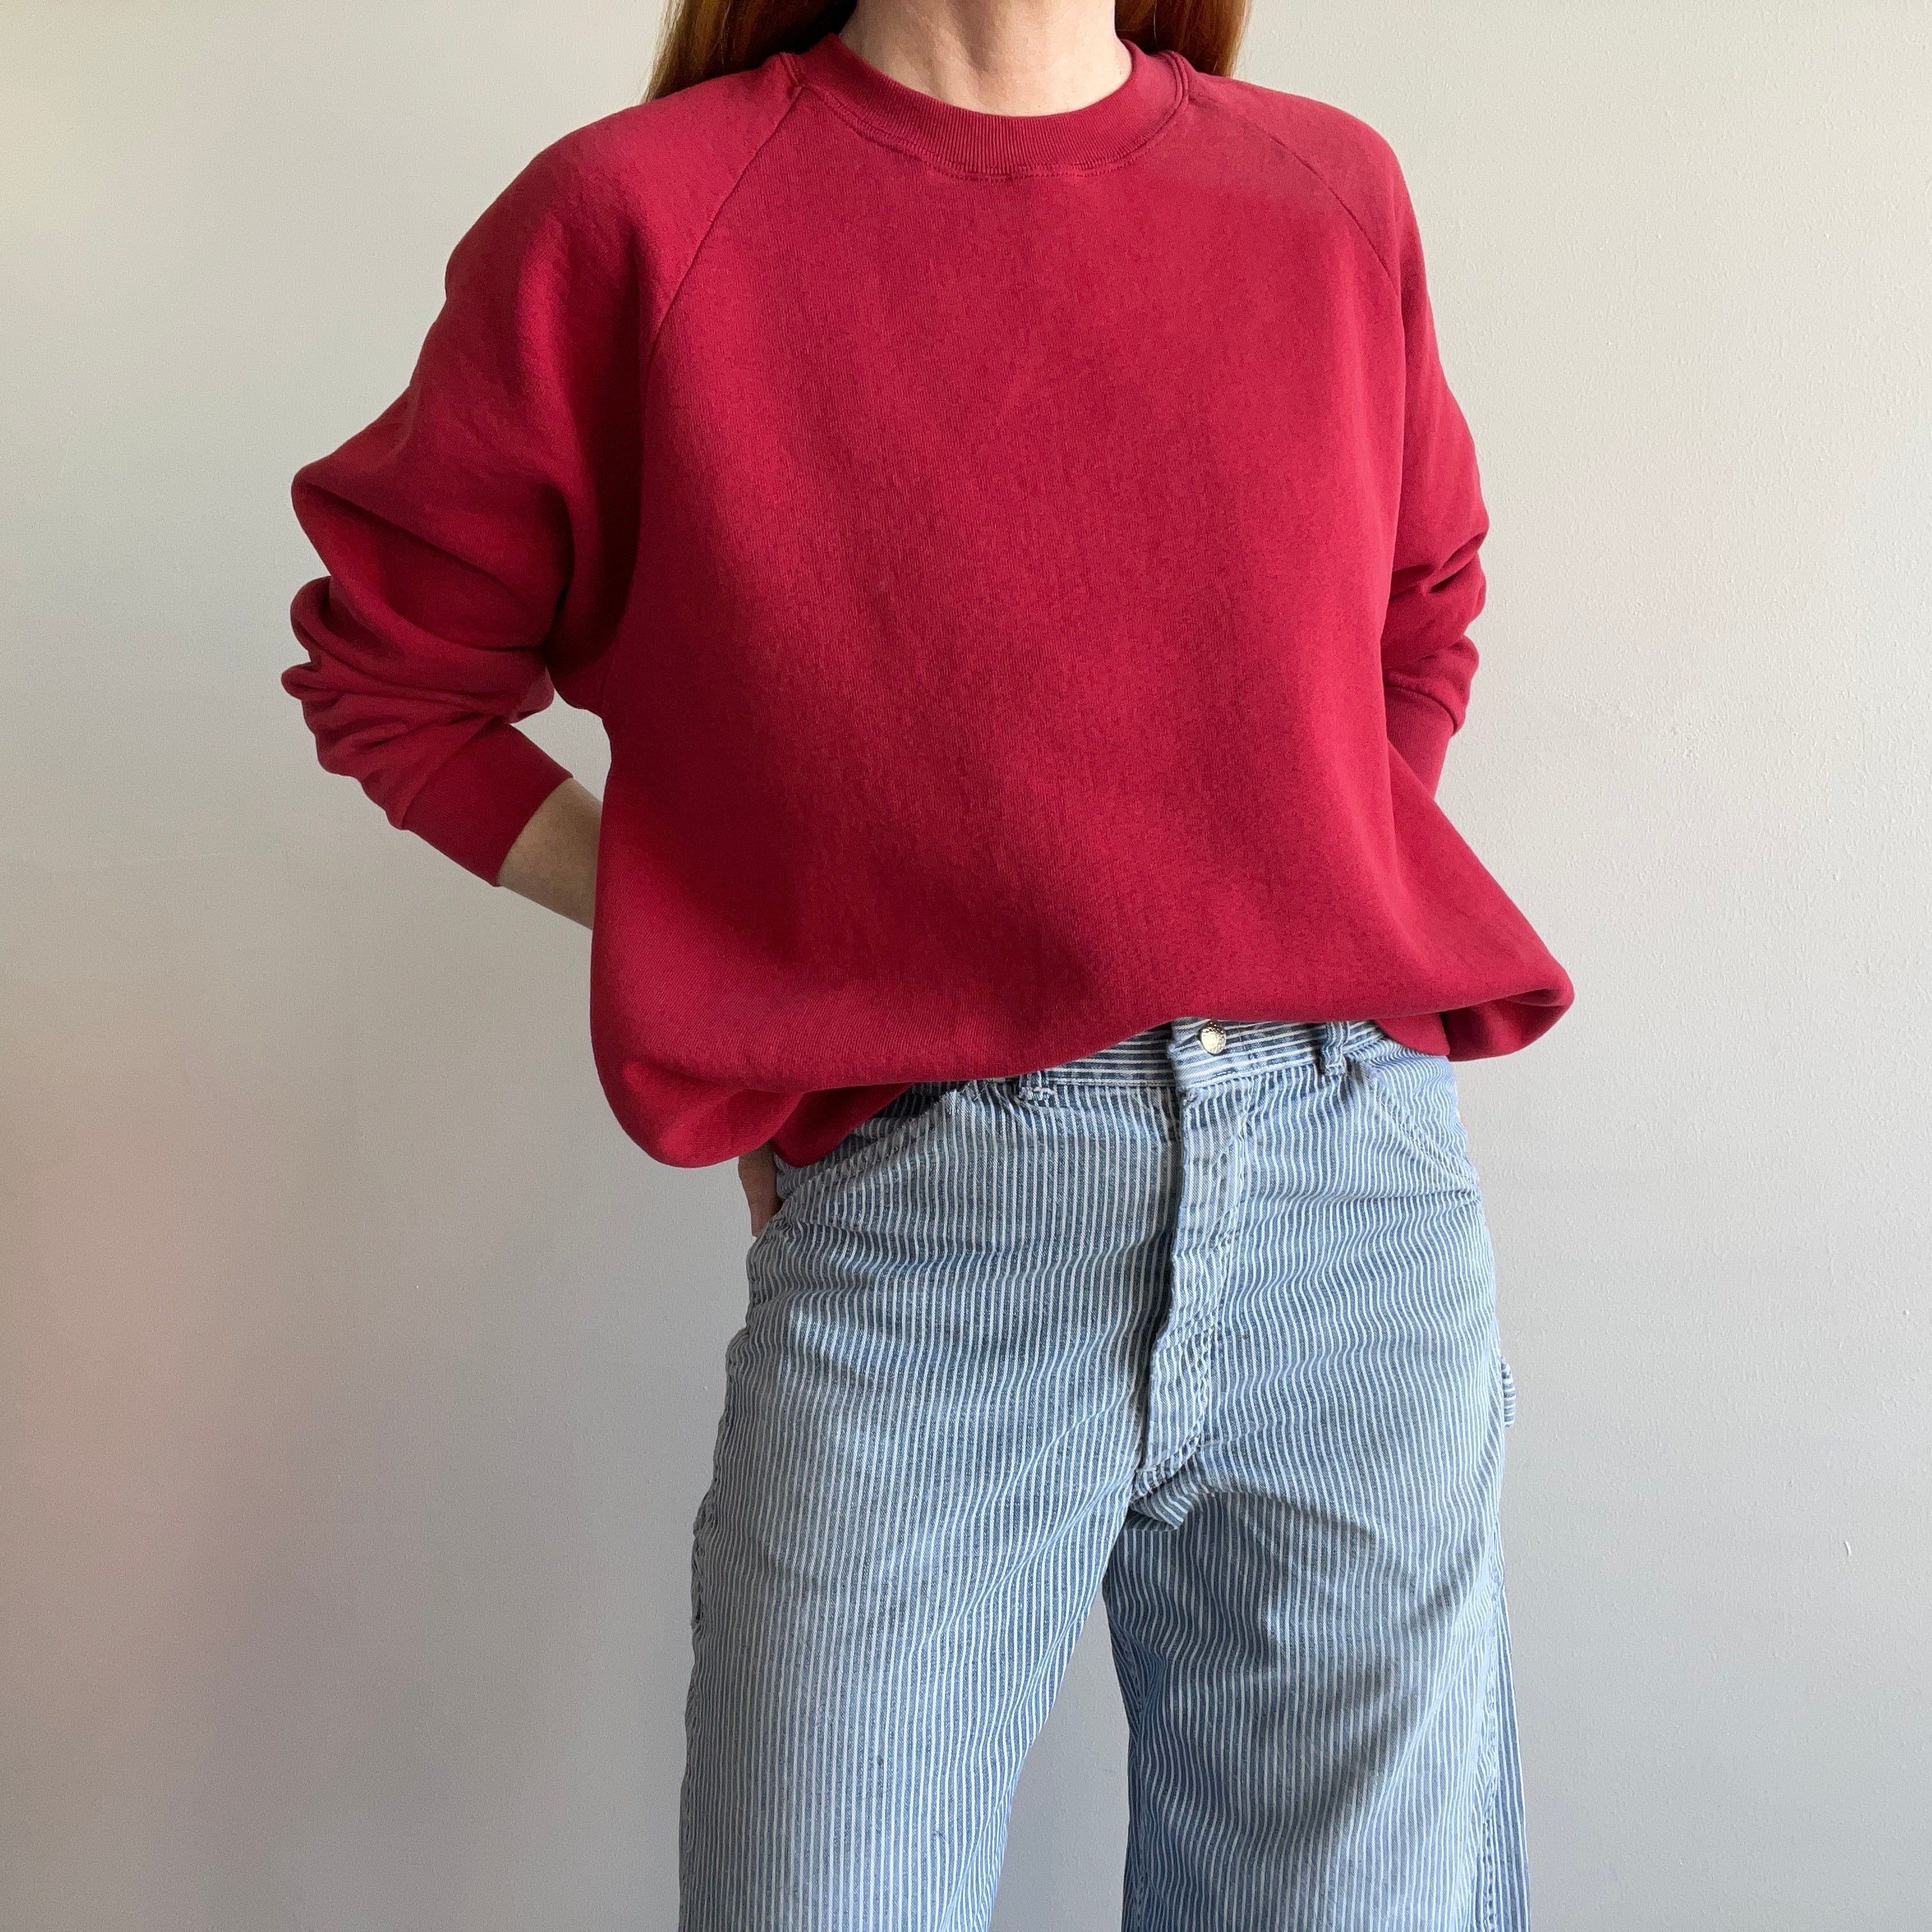 1990s Blank Red Sweatshirt